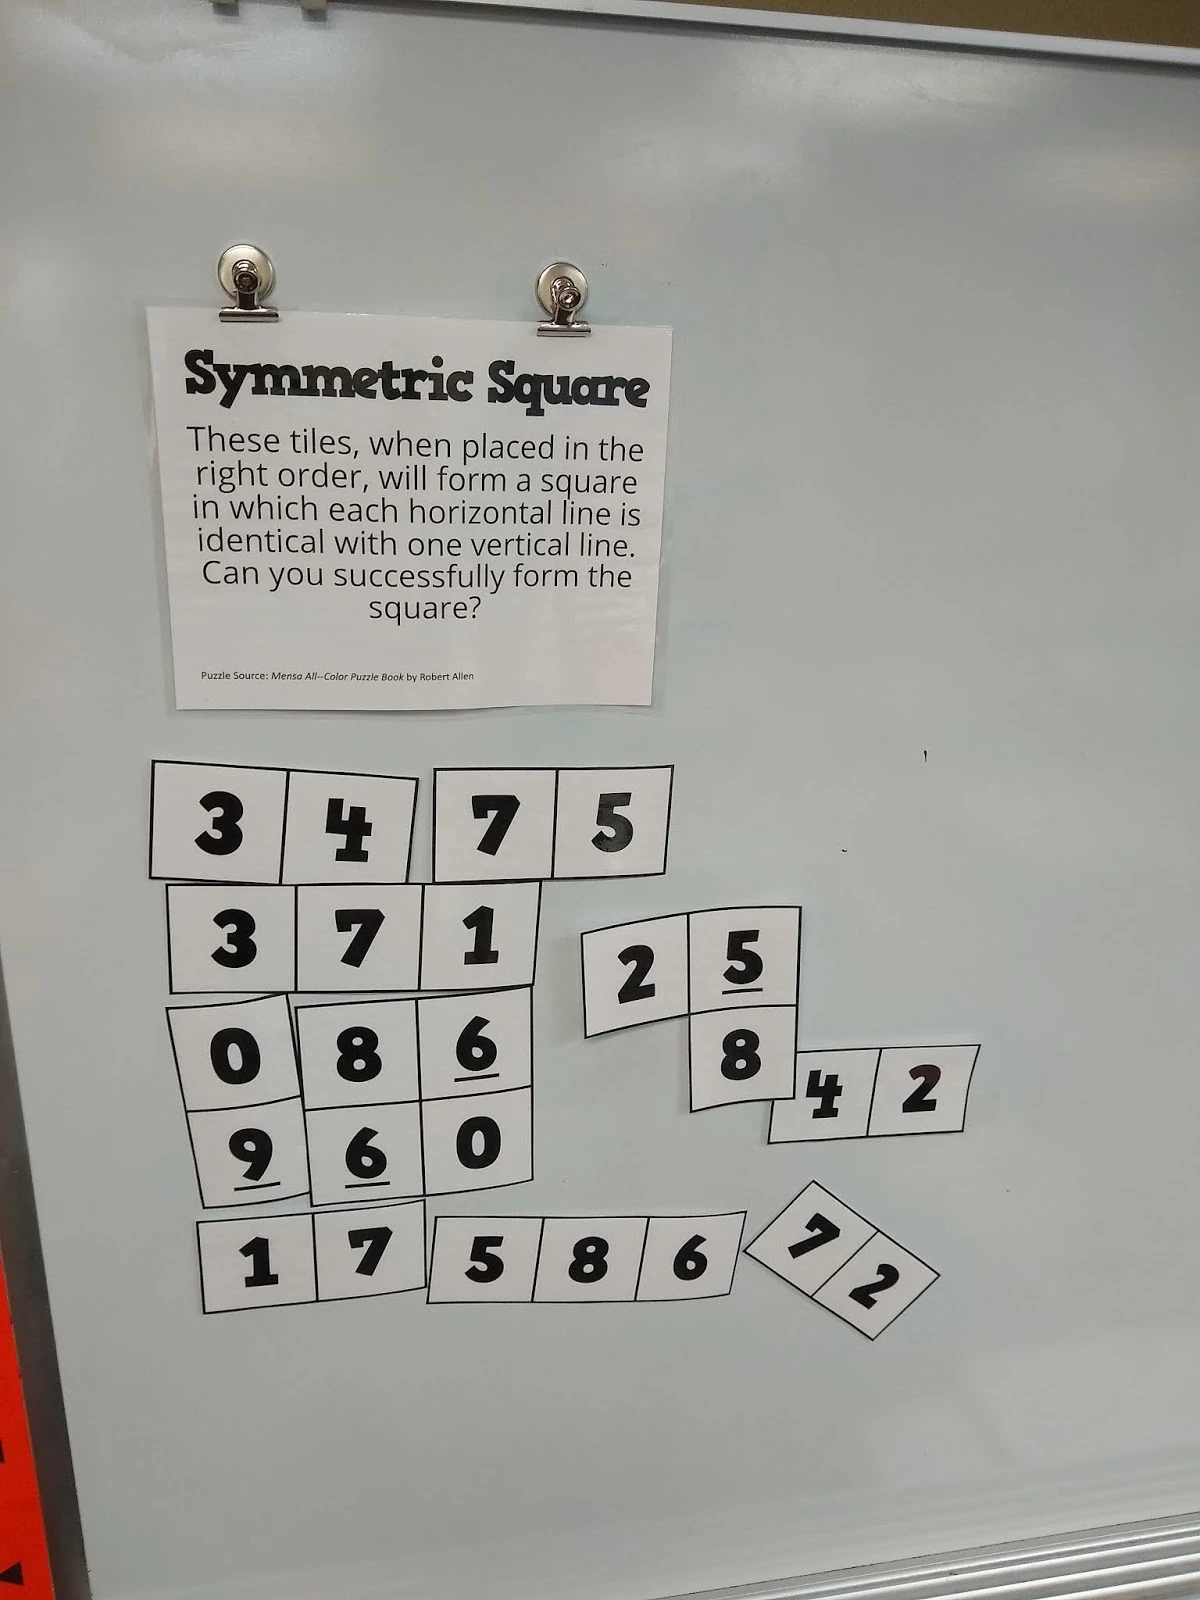 Symmetric Square Puzzle on Dry Erase Board. 